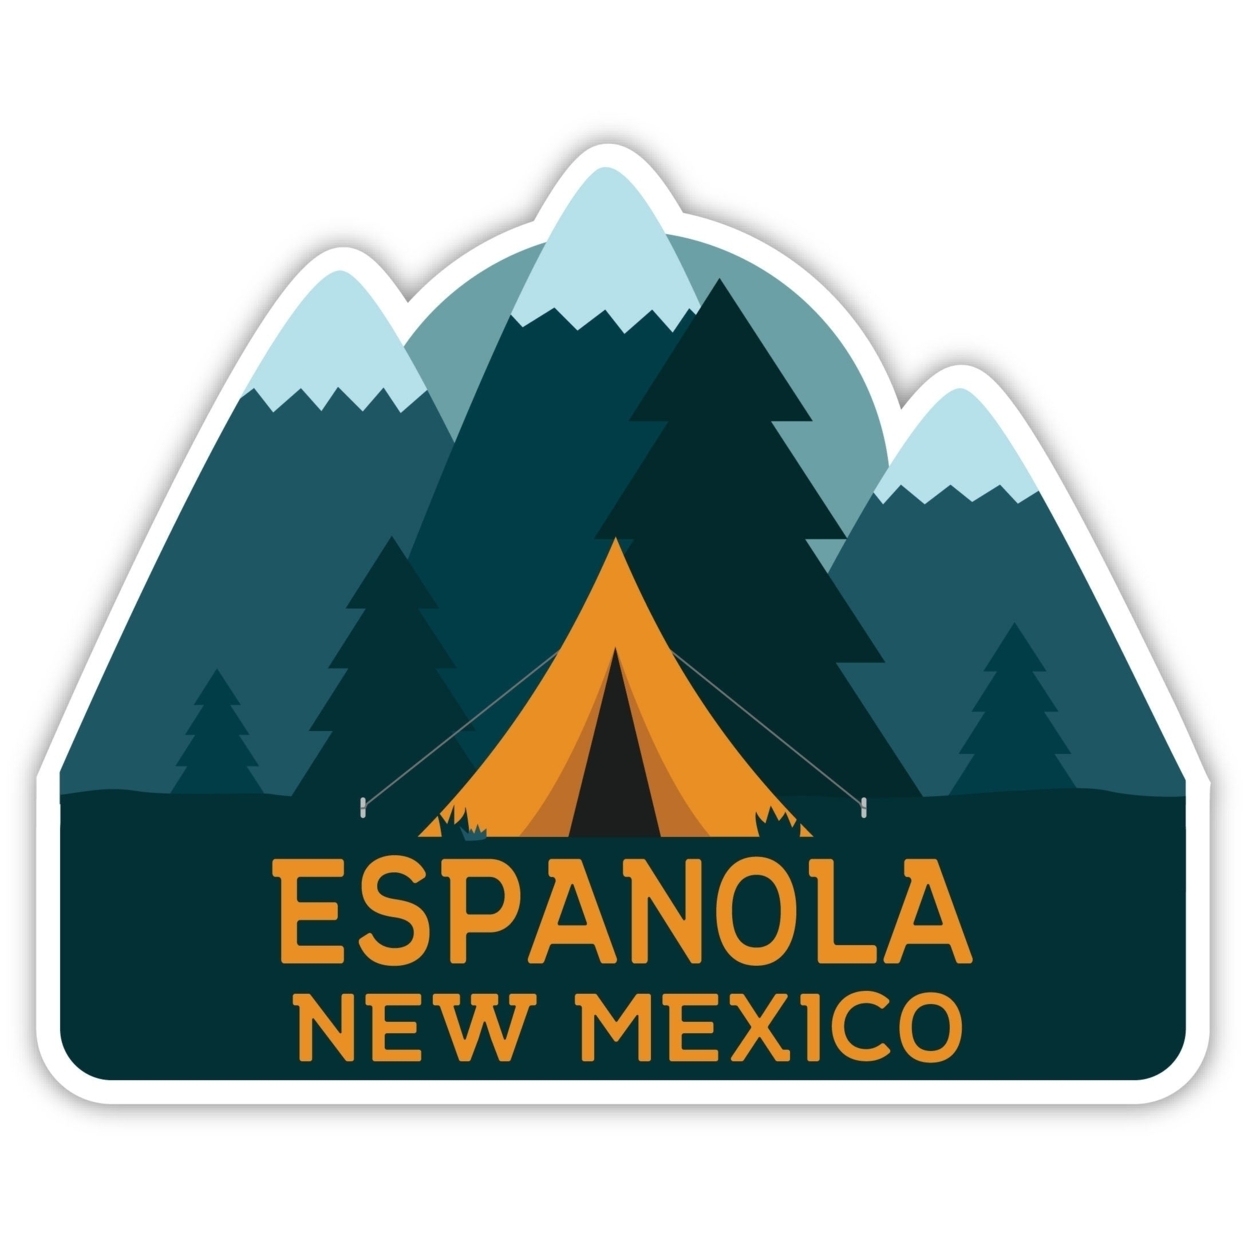 Espanola New Mexico Souvenir Decorative Stickers (Choose Theme And Size) - 4-Pack, 4-Inch, Tent